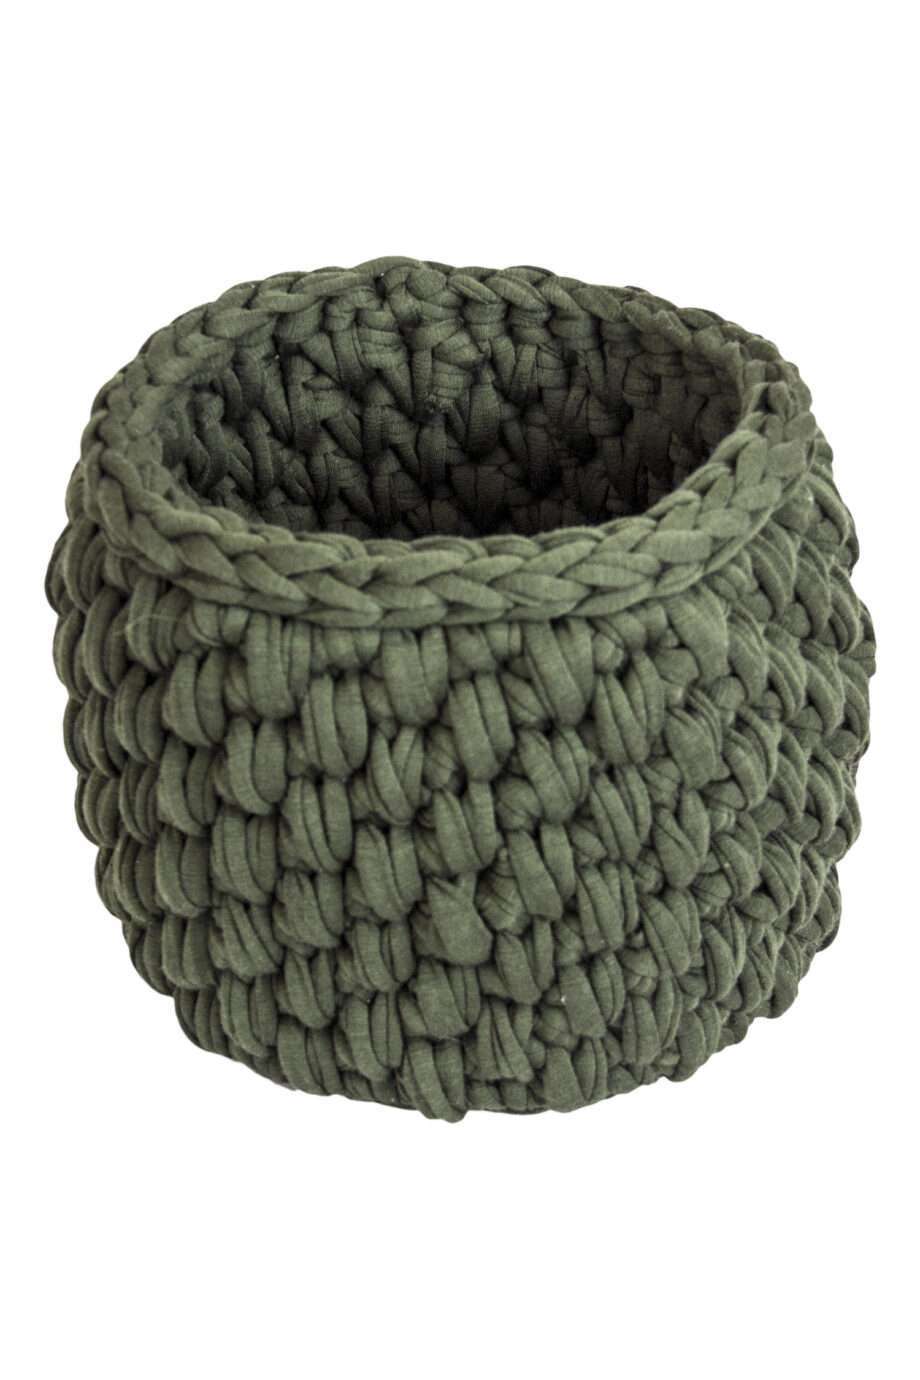 peony olive green crochet cotton basket small